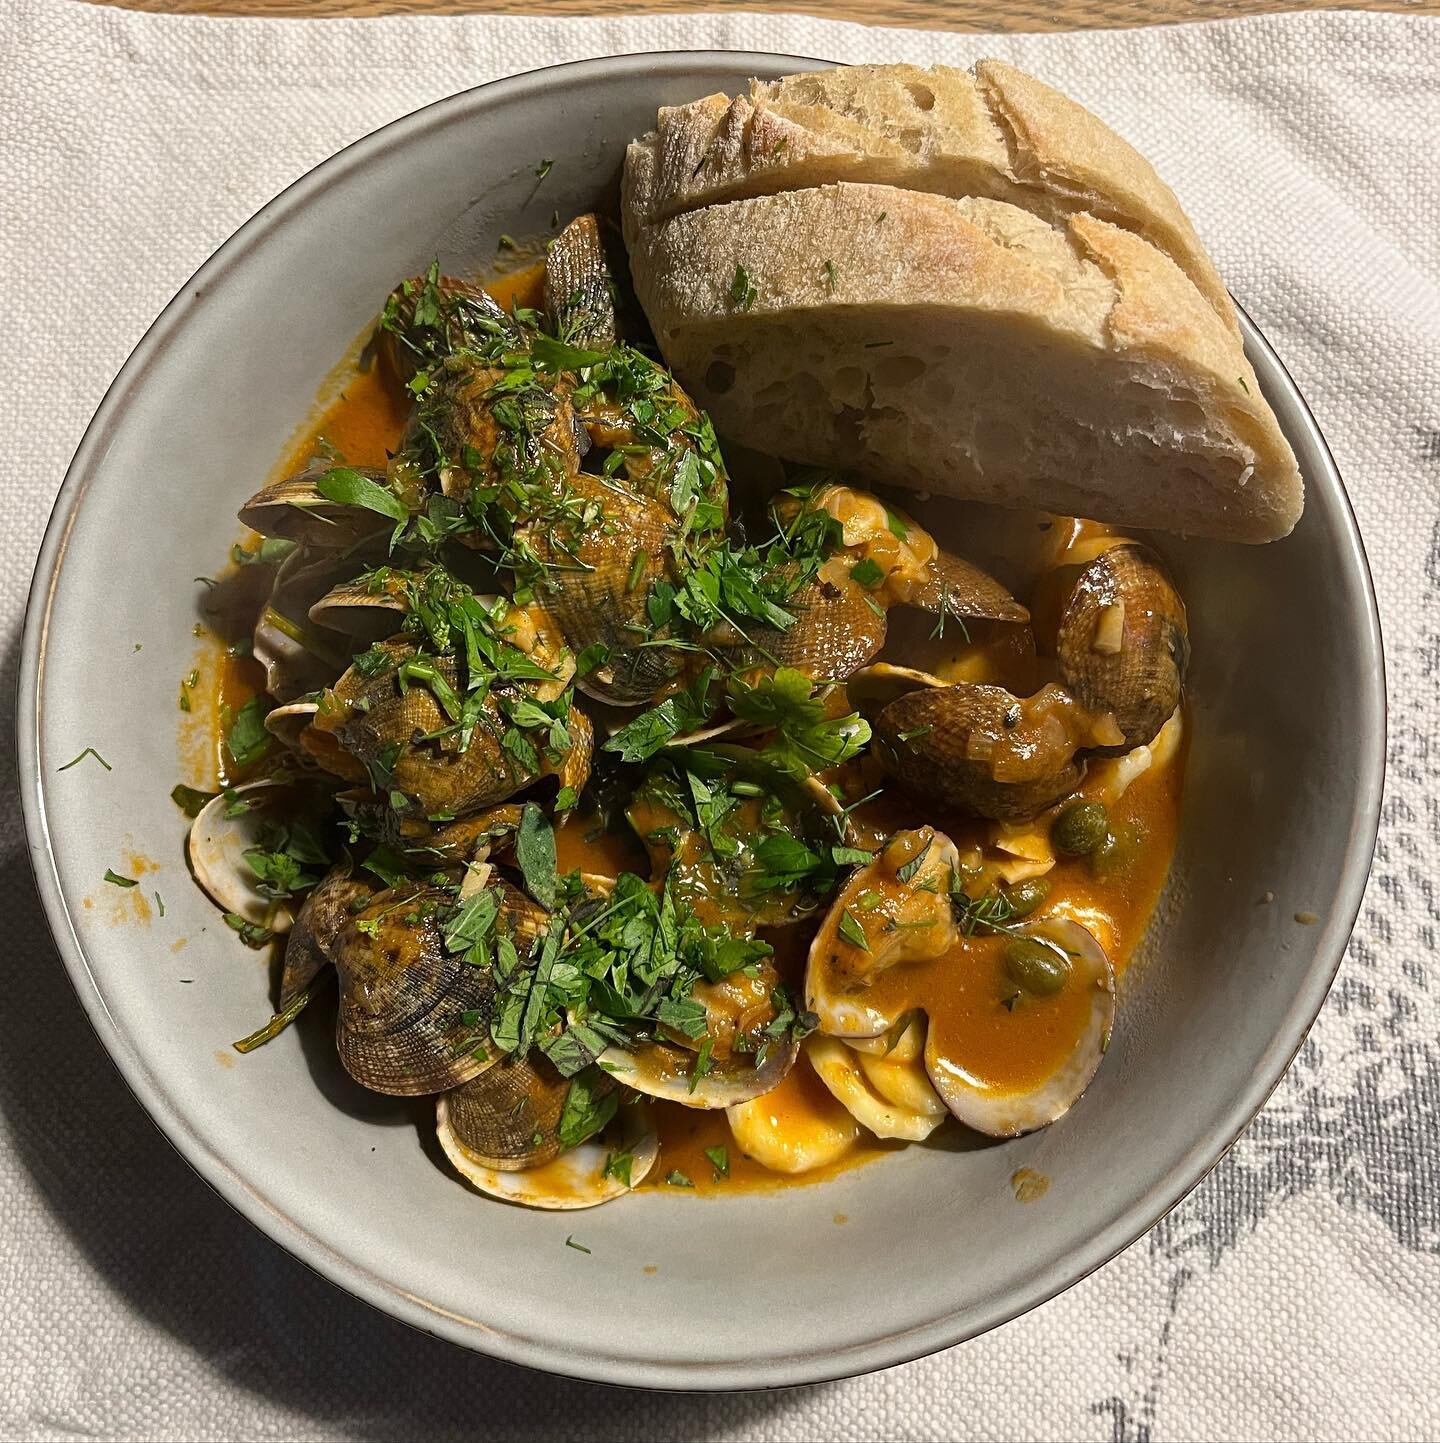 #dorsetclams #clams with spicy tomato broth #nordicfood #eatlocal #britishseafood #shellfish #yummy